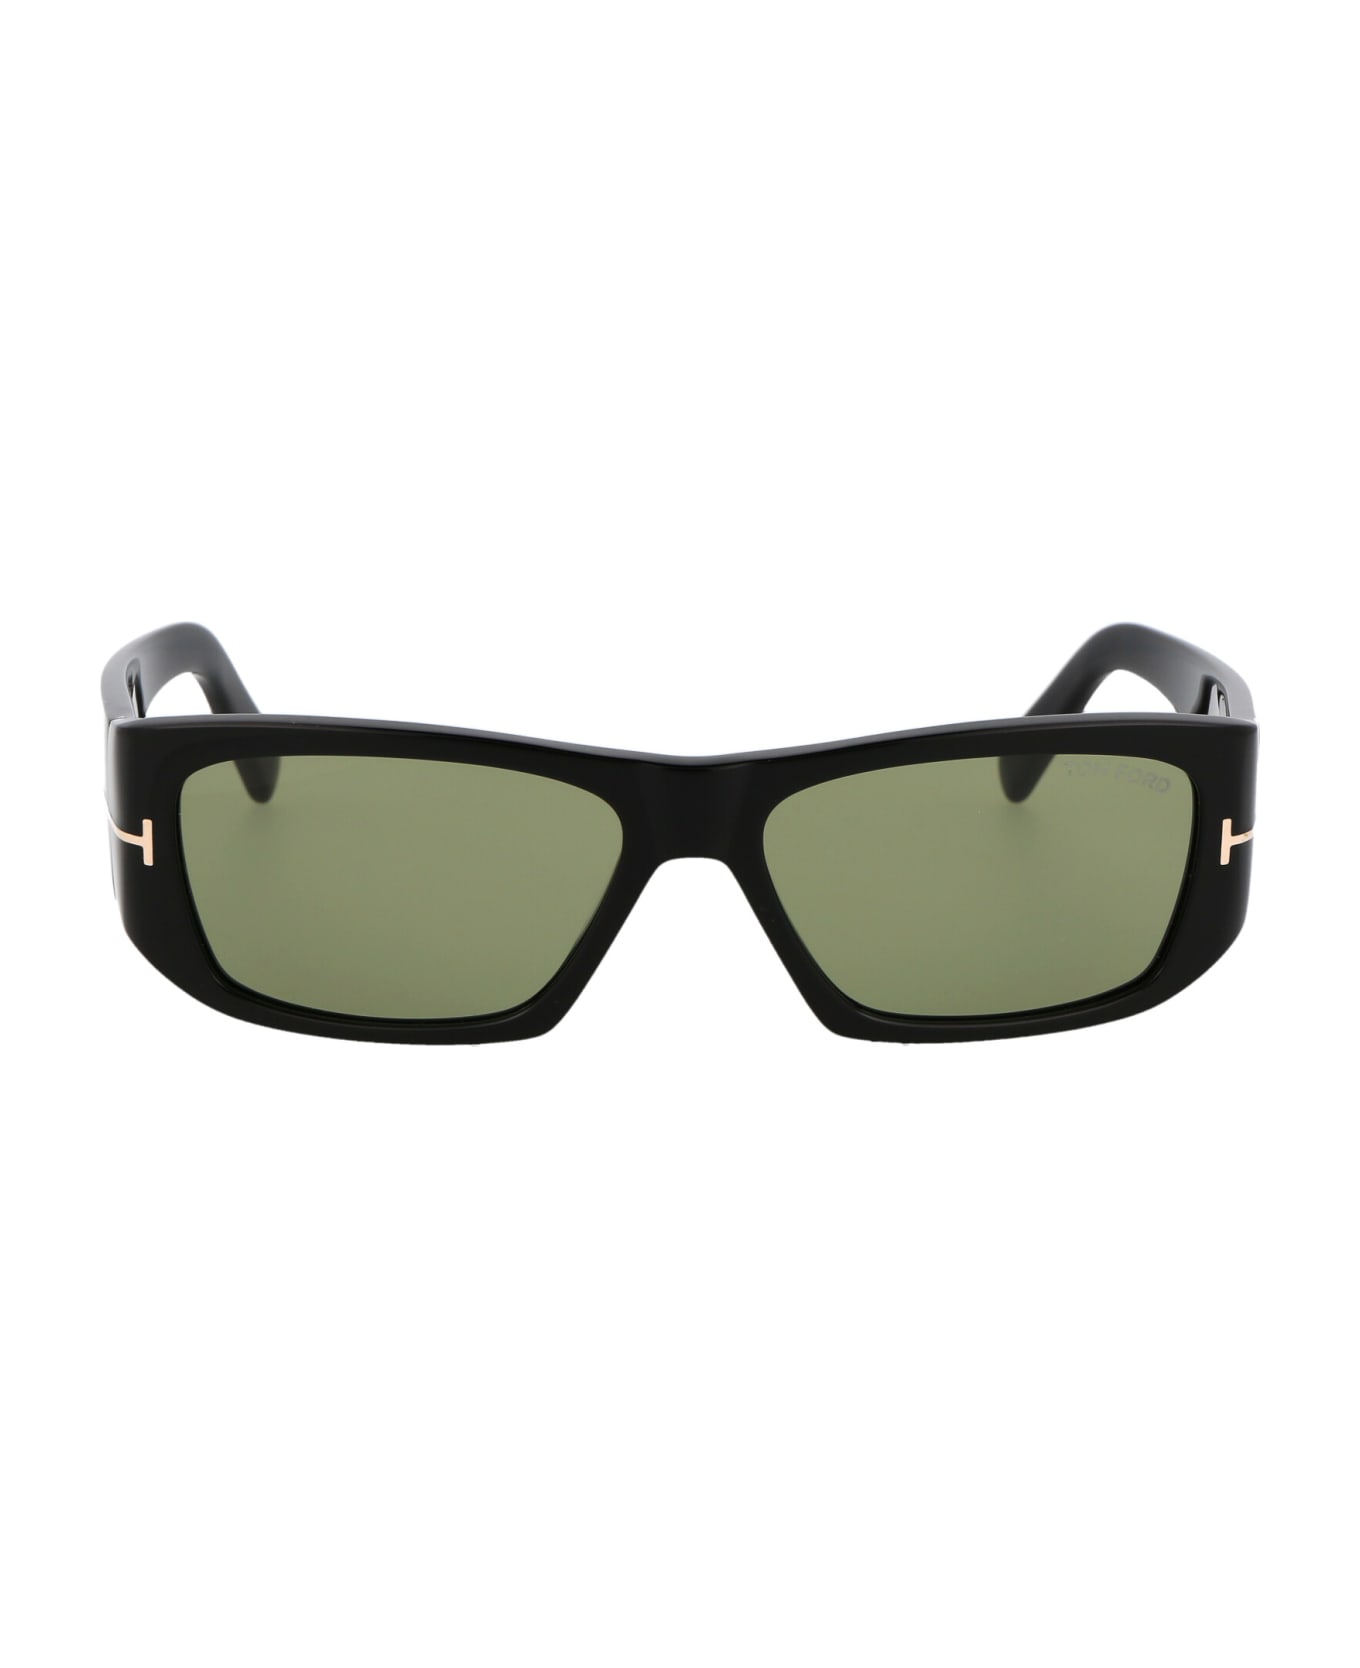 Tom Ford Eyewear Andres-02 Sunglasses - 01N Nero Lucido / Verde